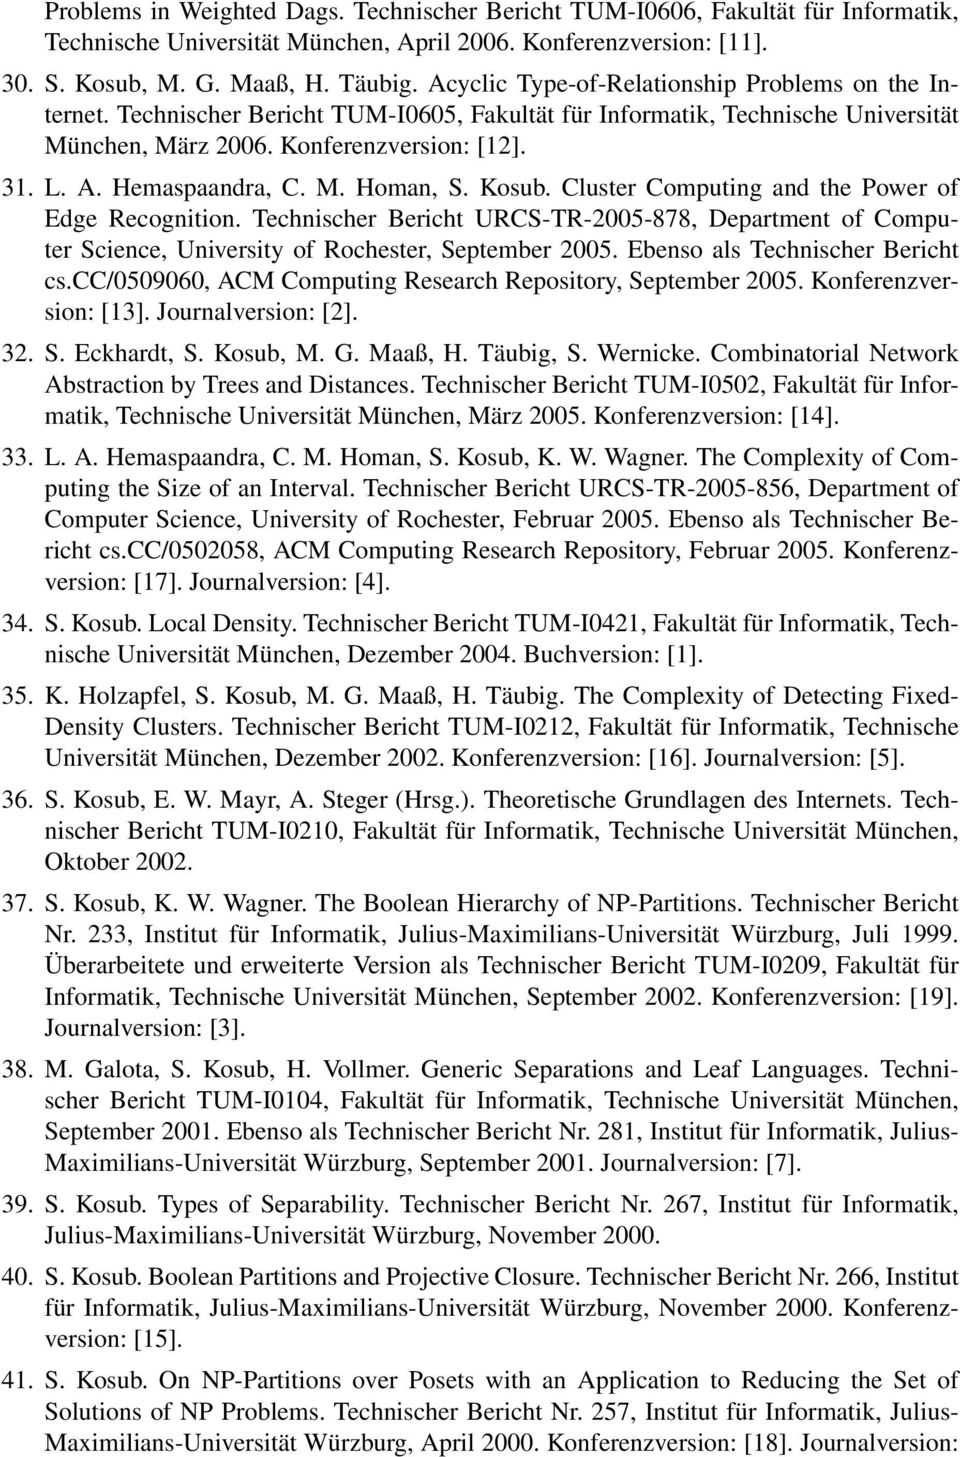 Hemaspaandra, C. M. Homan, S. Kosub. Cluster Computing and the Power of Edge Recognition. Technischer Bericht URCS-TR-2005-878, Department of Computer Science, University of Rochester, September 2005.